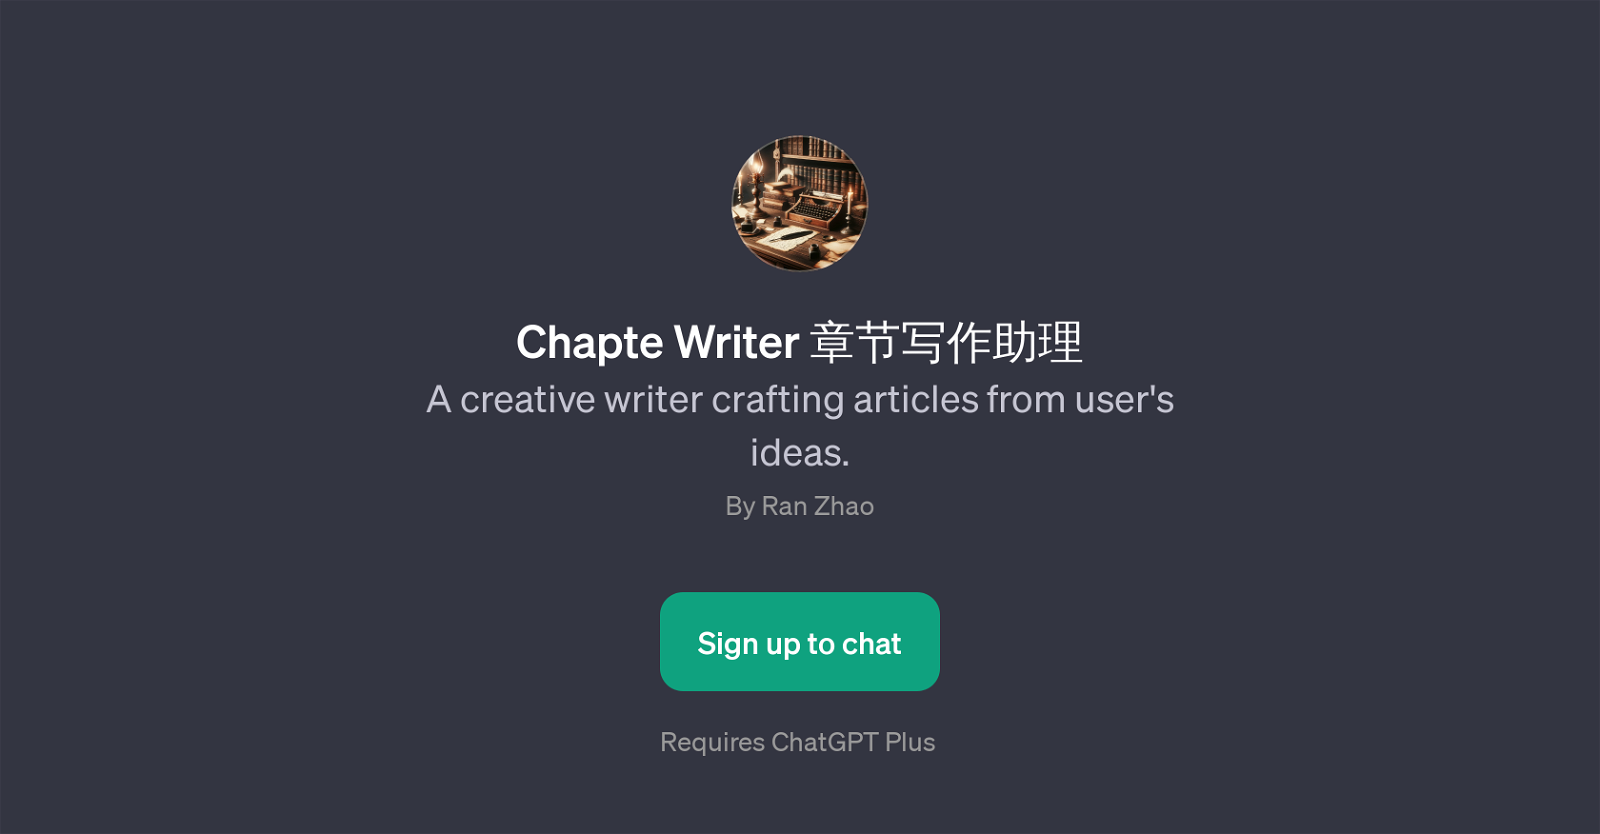 Chapte Writer website